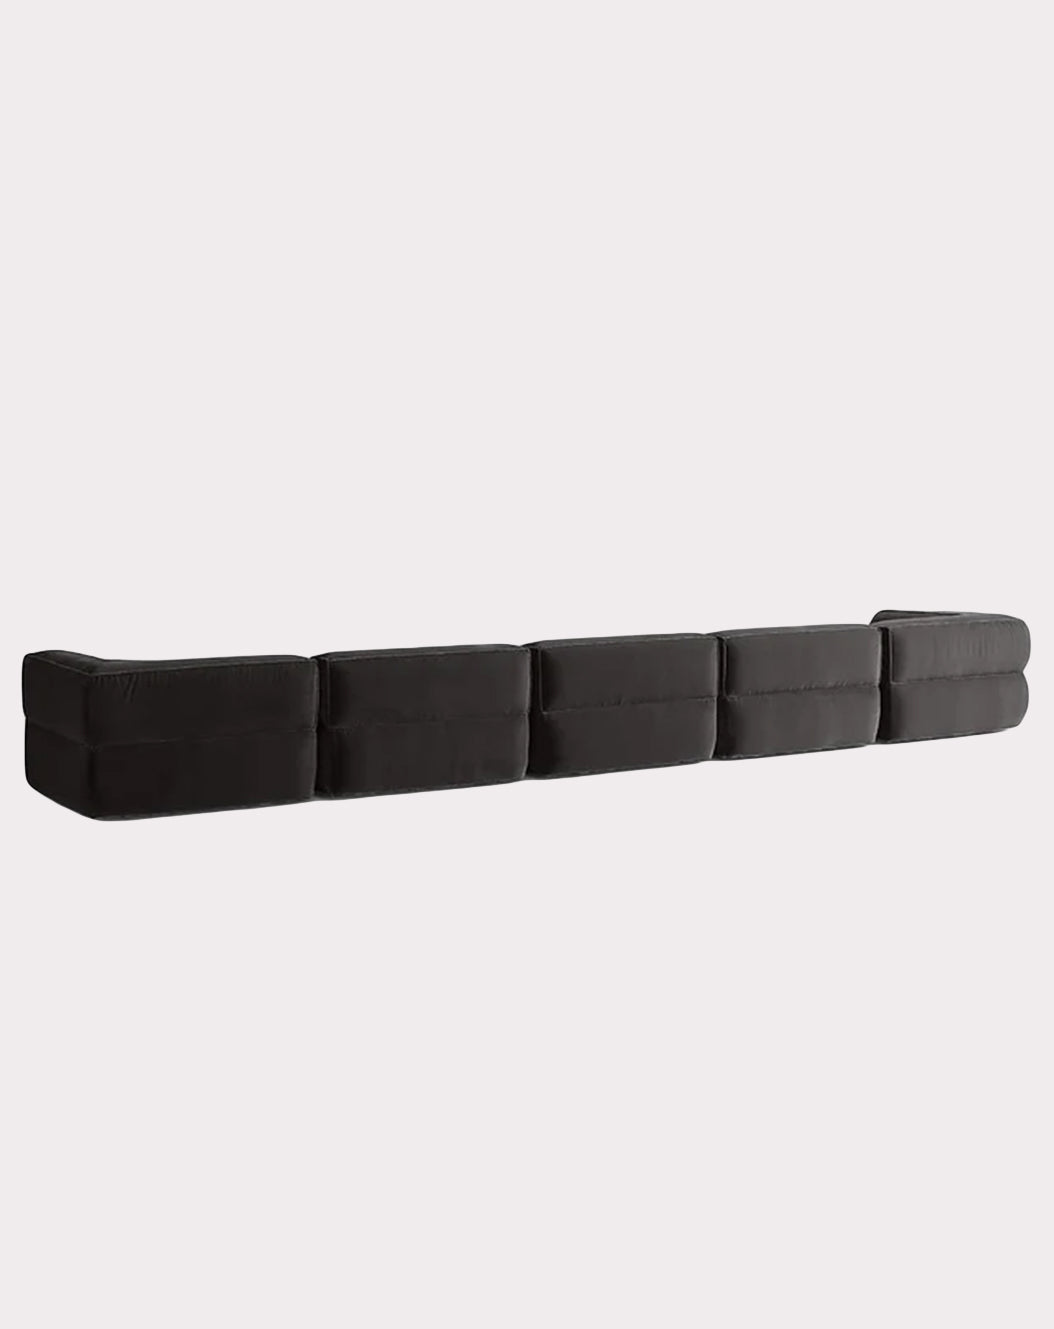 Angolare 5-Piece Sectional Sofa